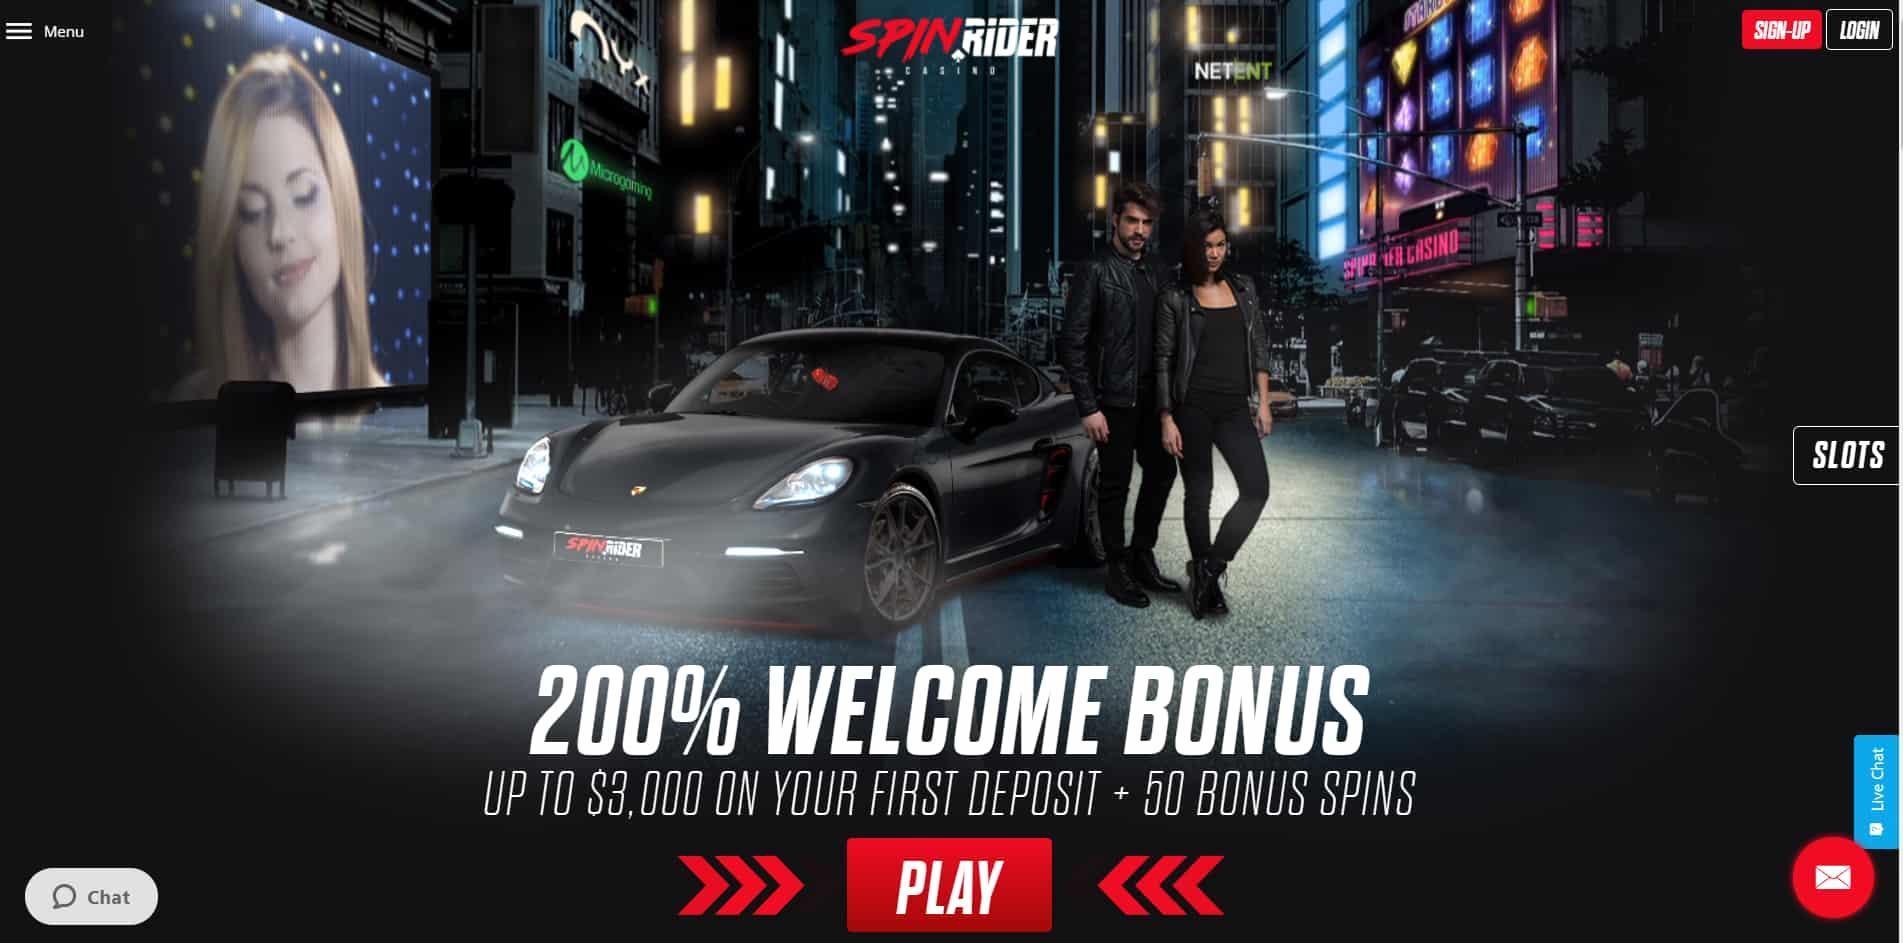 SpinRider casino homepage